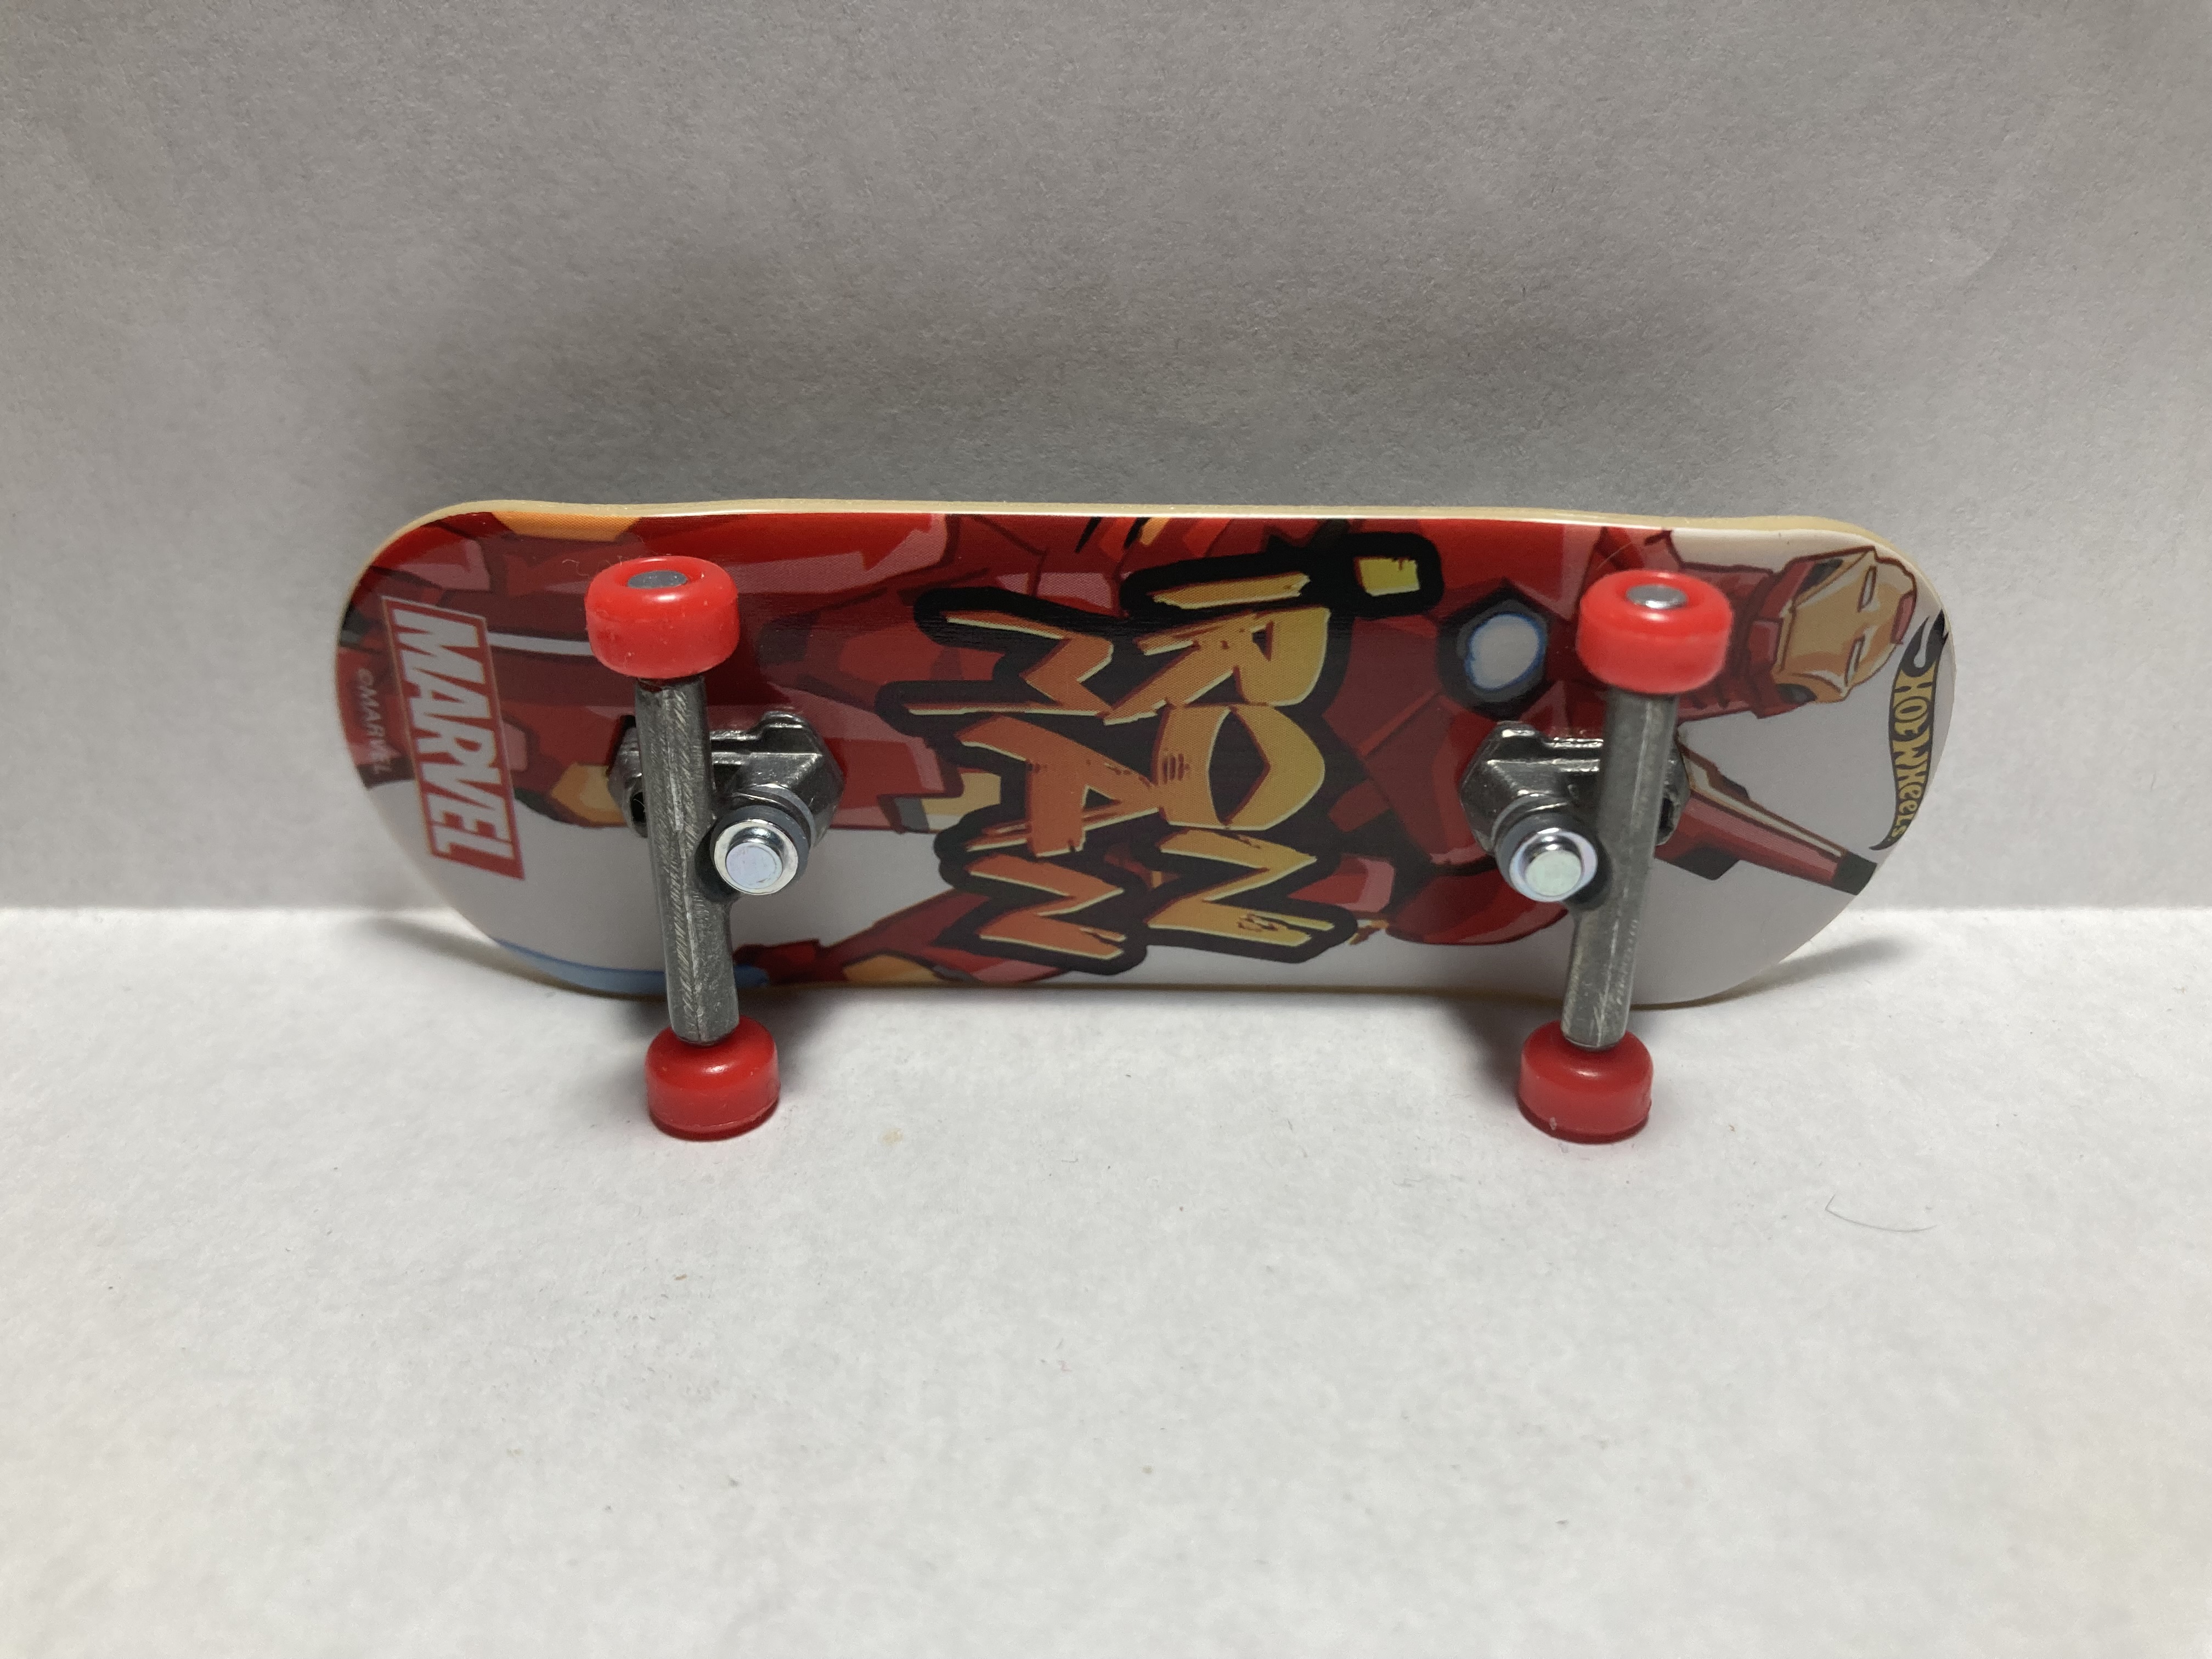 Hot Wheels Skate de Dedo - Shredator - Mattel HGT46/HNG23